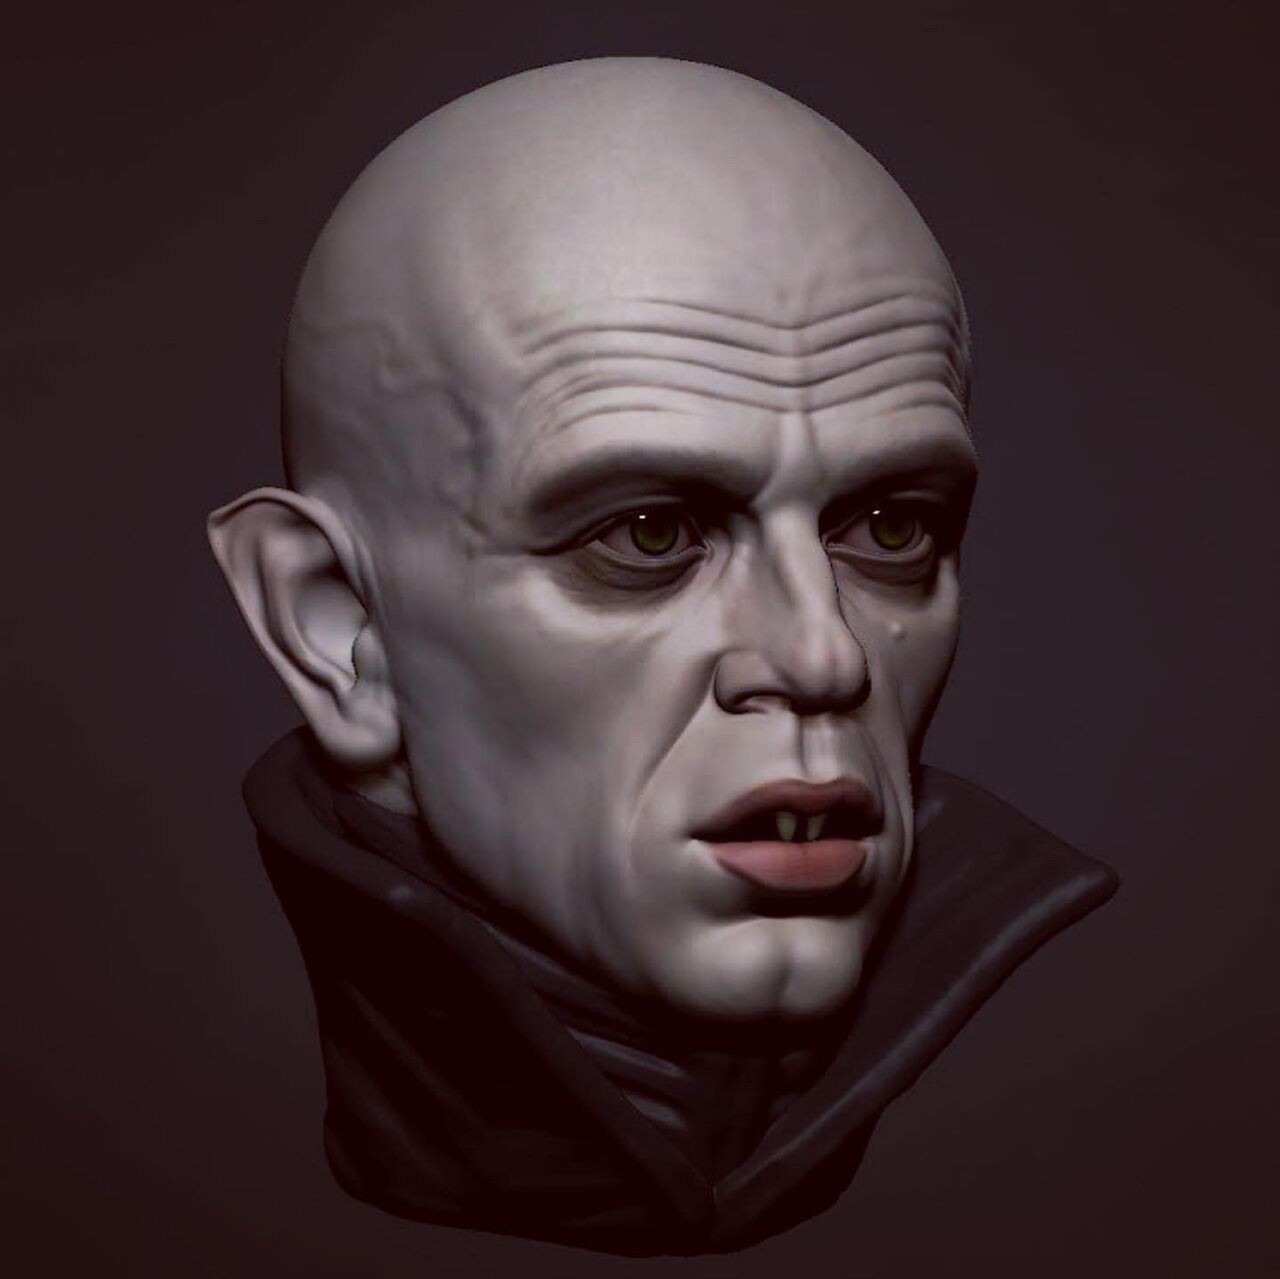 ArtStation - Nosferatu The Vampyre study